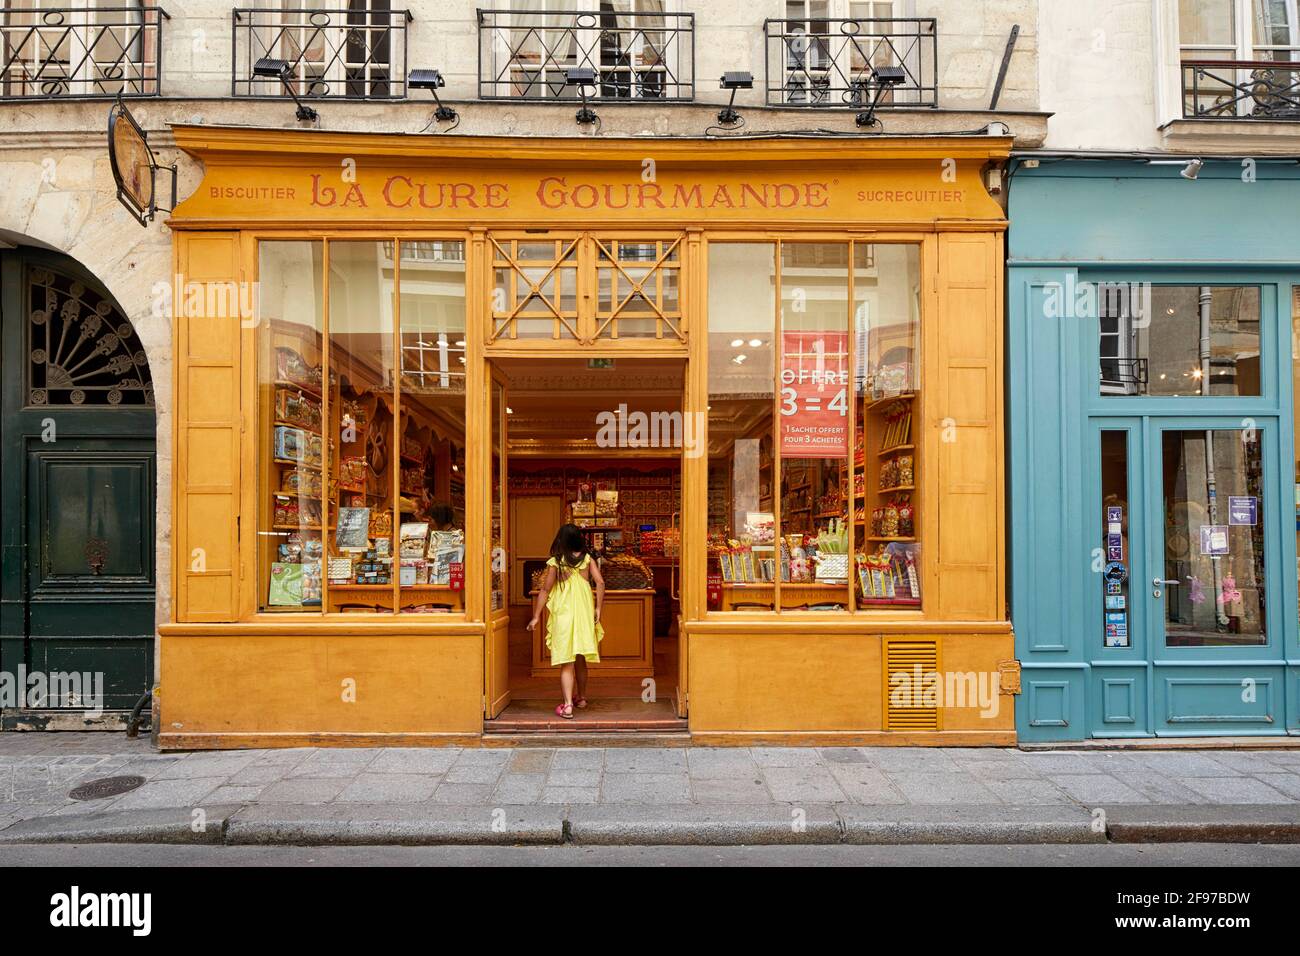 La Cure Gourmande Geschäft auf der Insel L'Ile Saint Louis in Paris Frankreich Stockfoto